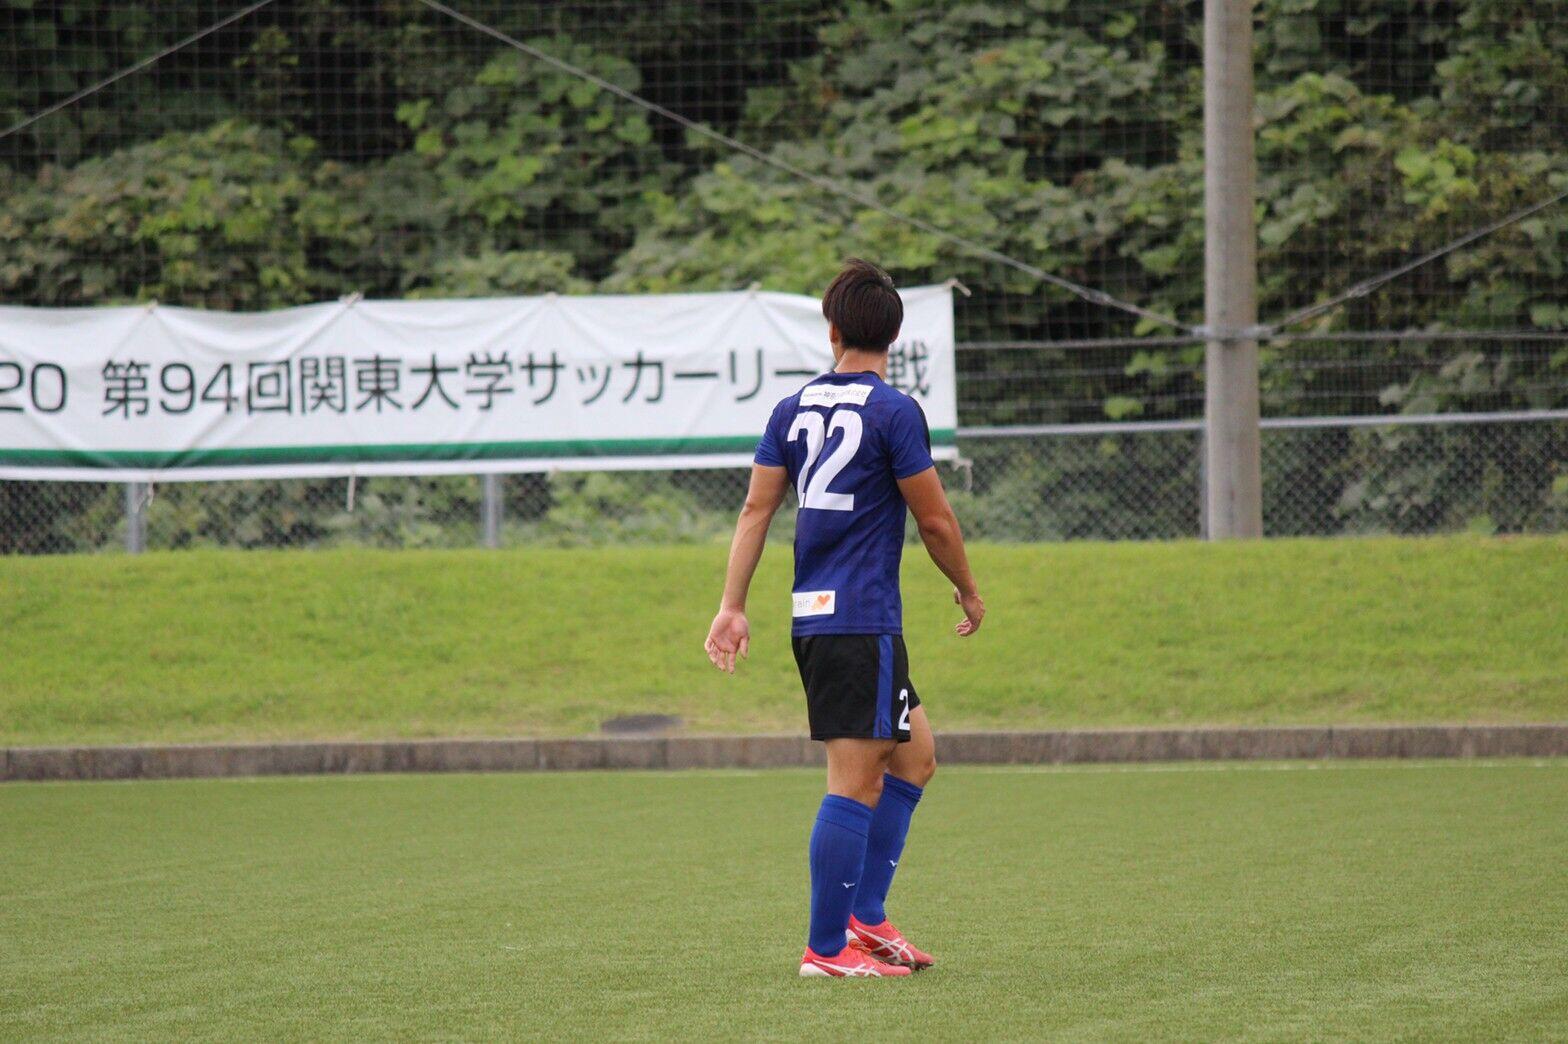 https://football.ku-sports.jp/blog/photoreport/images/c8dd9947ab06b5193ee78c2a26ef45de62959857.jpg